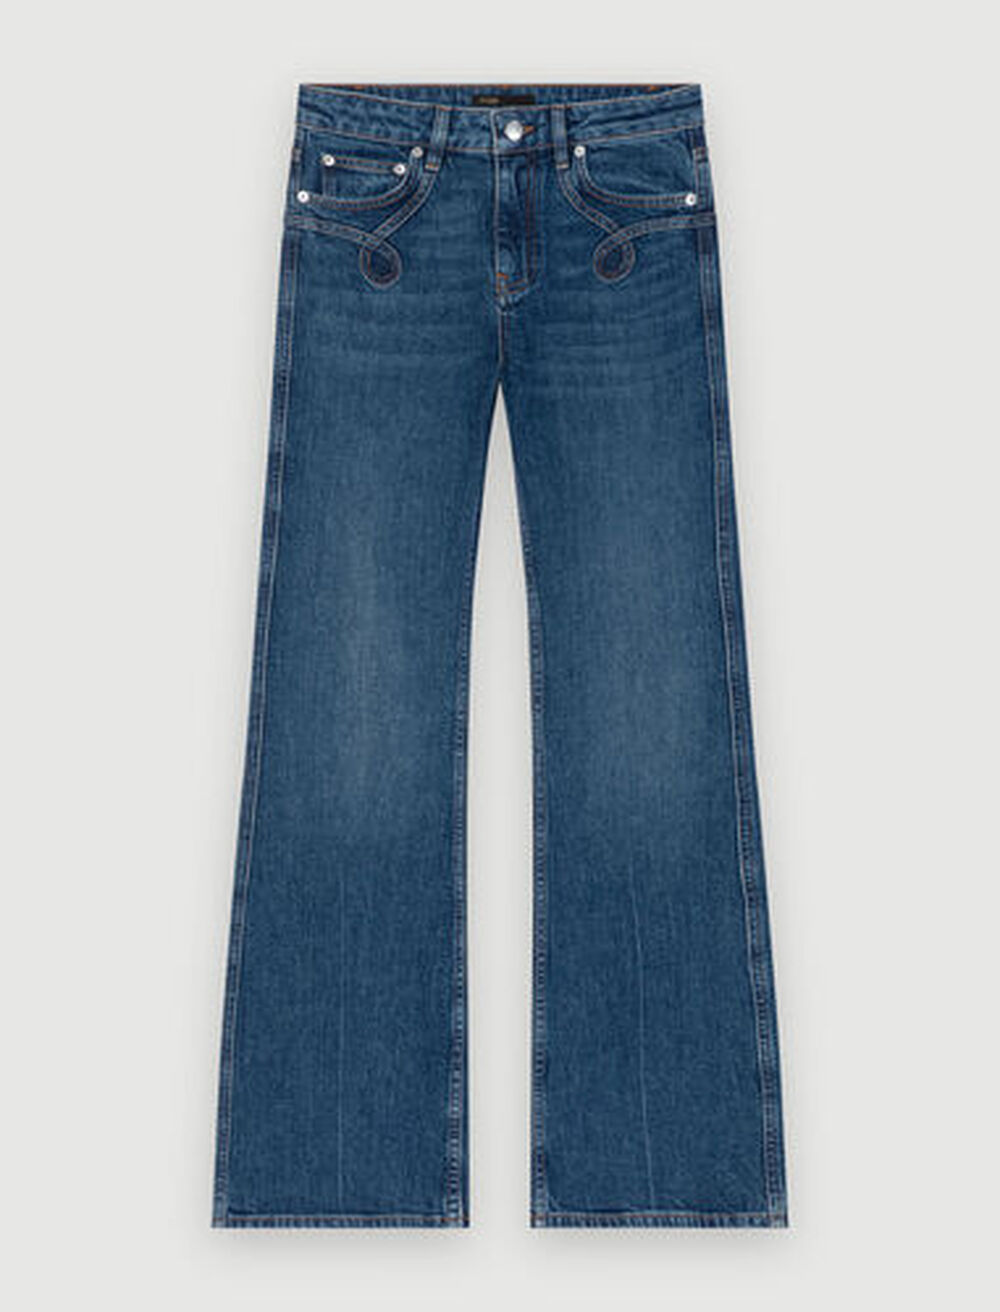 223PRANY Embroidered flared jeans - Jeans - Maje.com